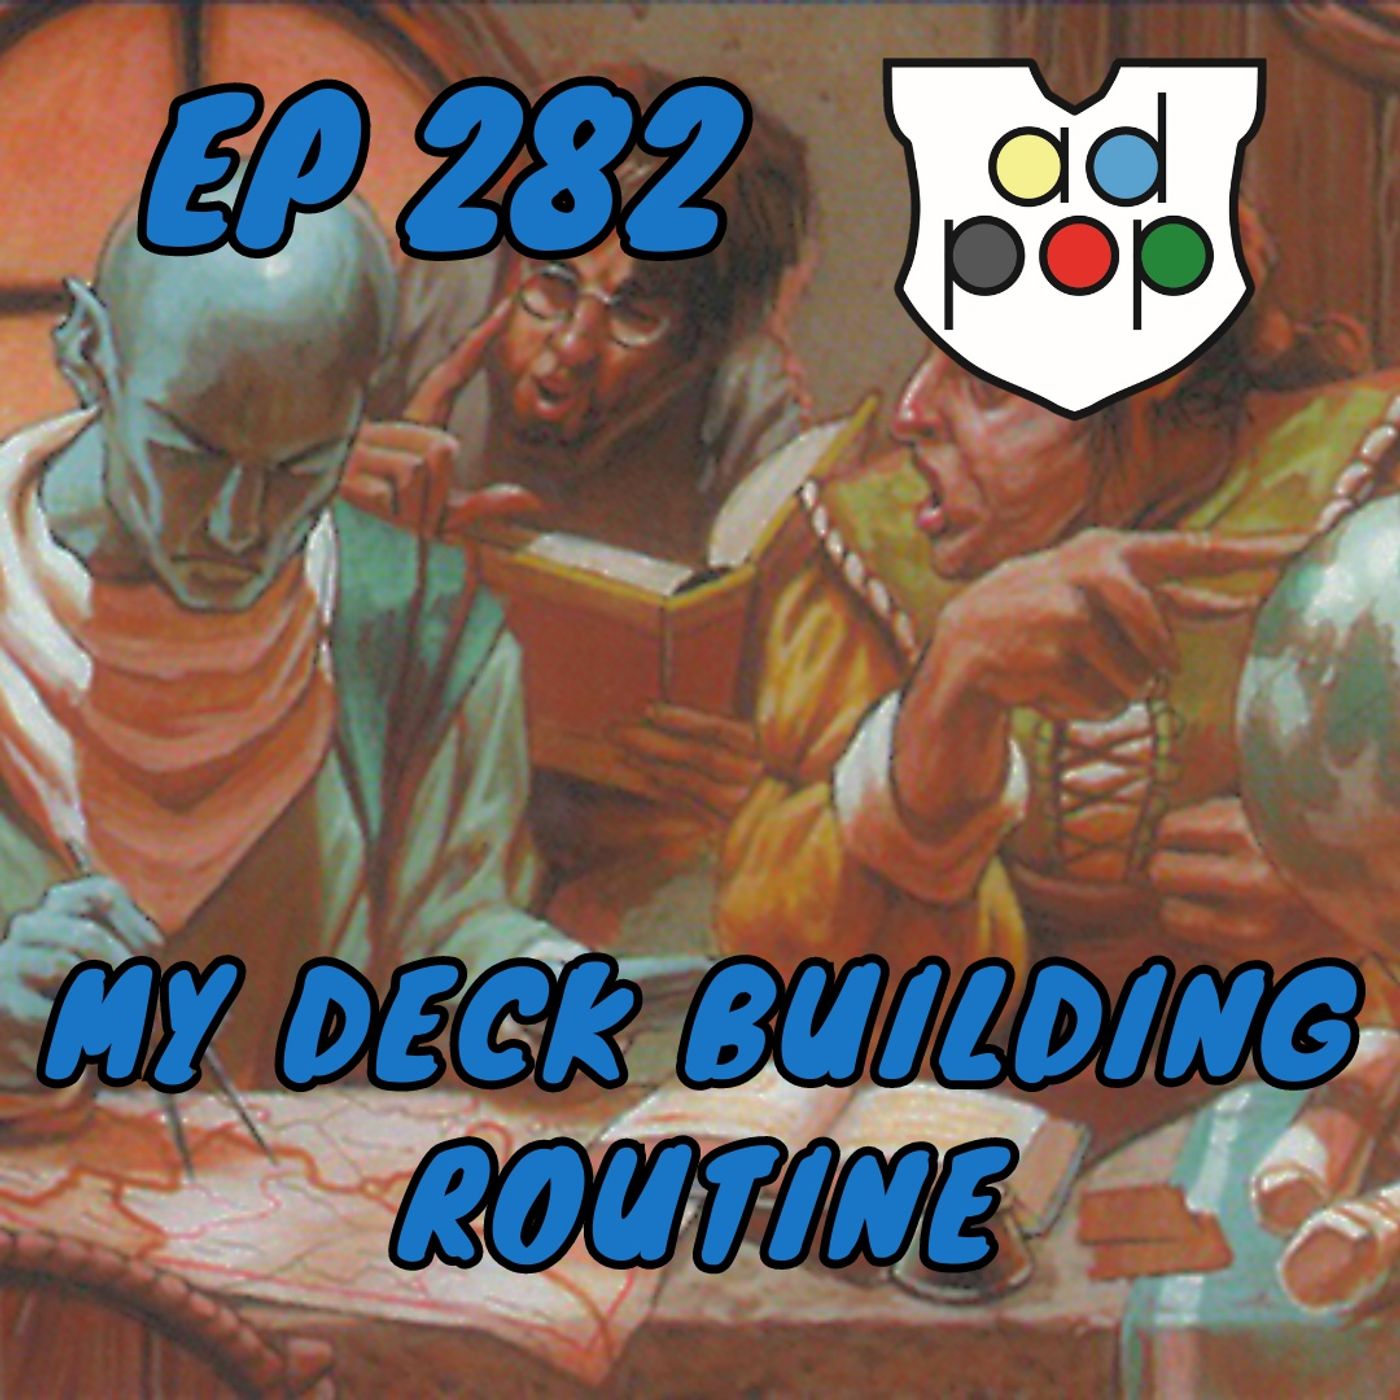 Commander ad Populum, Ep 282 - My Deck Building Routine